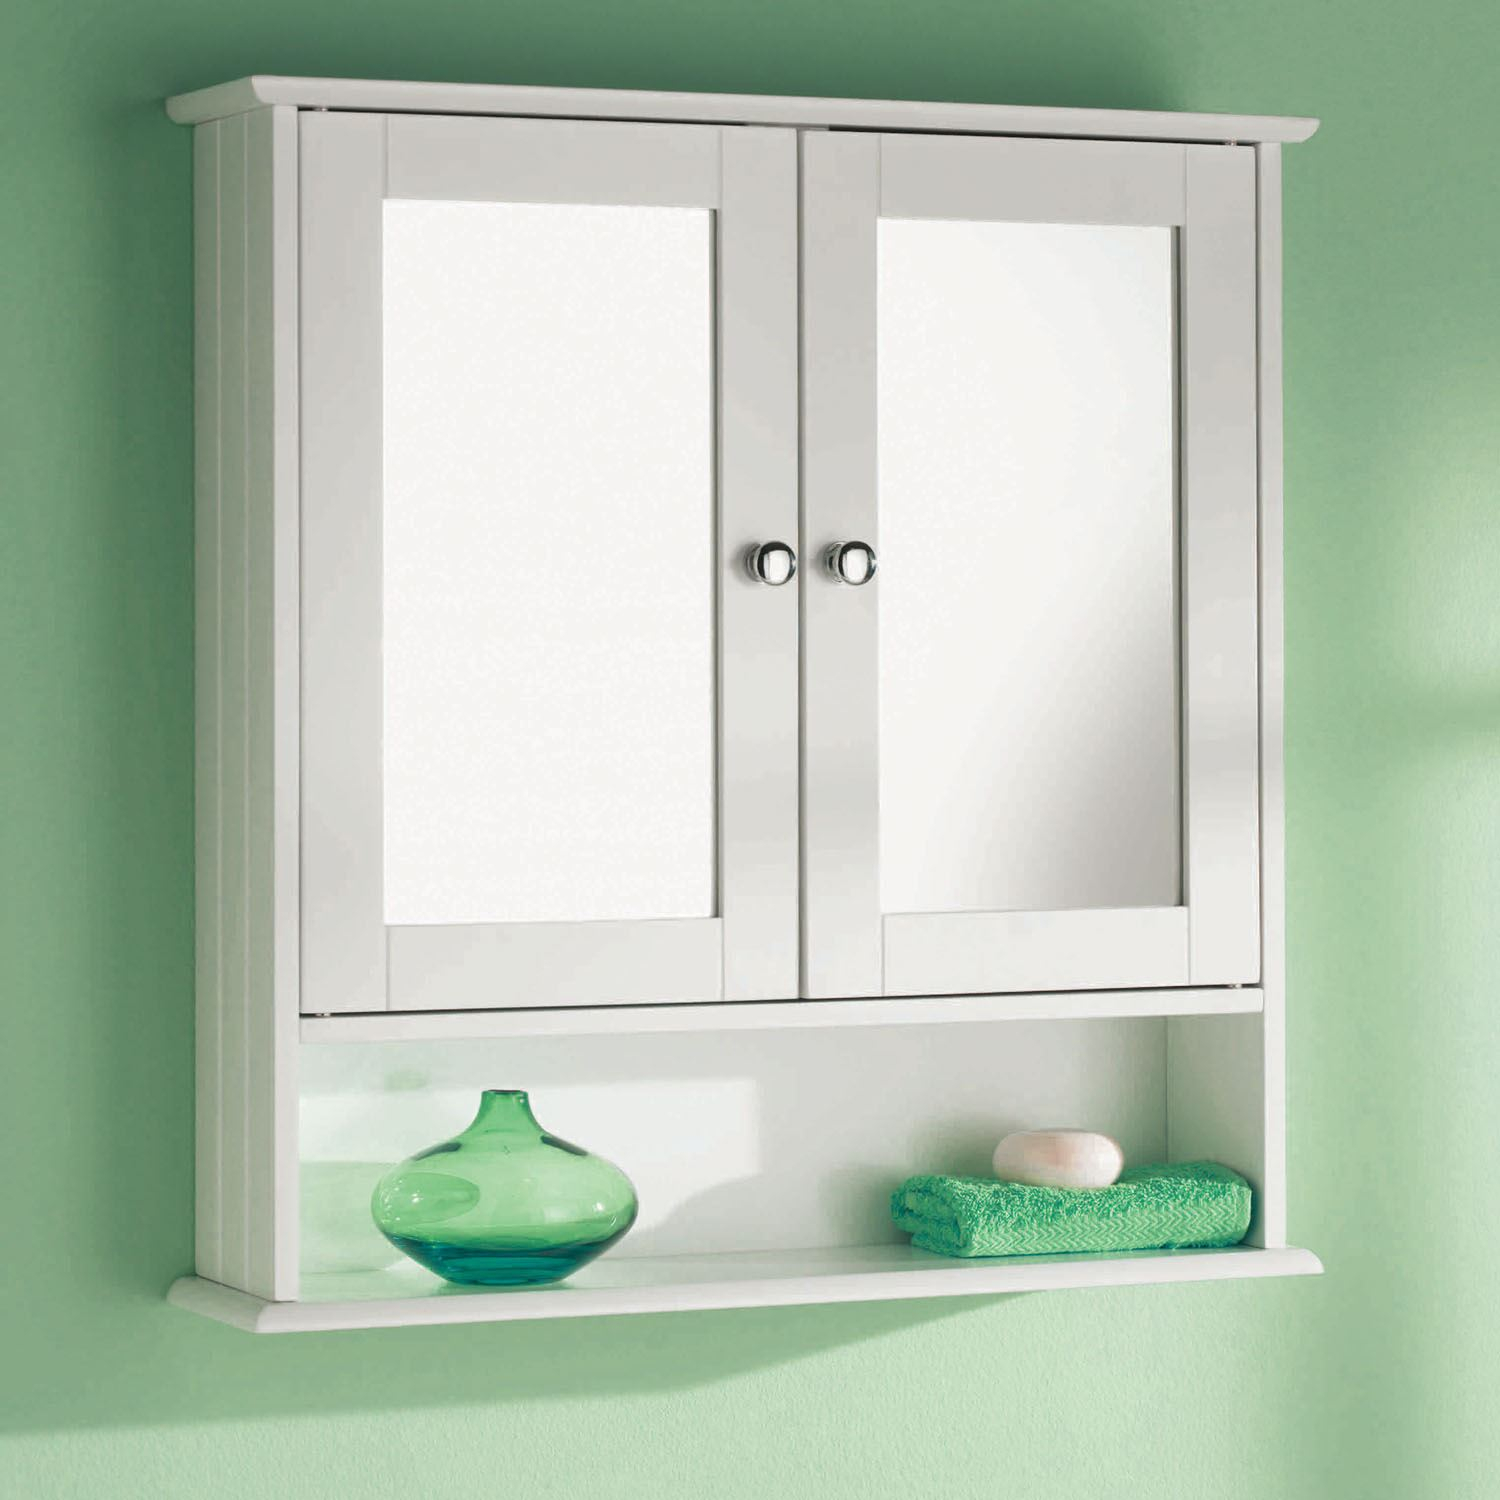 Double Door Mirror Shelf Wall Mounted Wood Storage Bathroom with regard to size 1500 X 1500